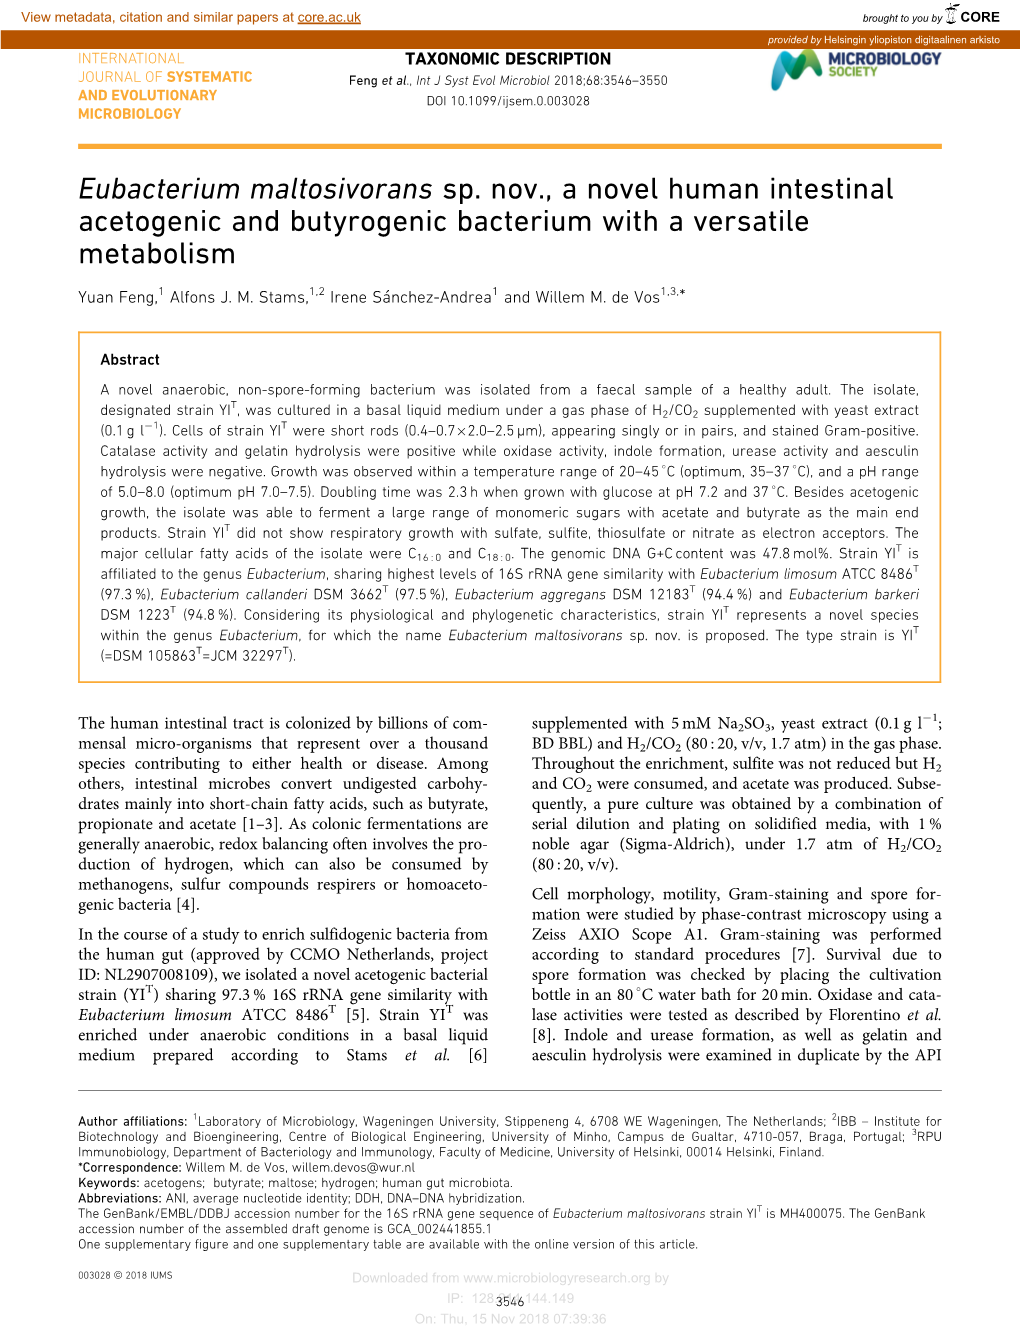 Eubacterium Maltosivorans Sp. Nov., a Novel Human Intestinal Acetogenic and Butyrogenic Bacterium with a Versatile Metabolism